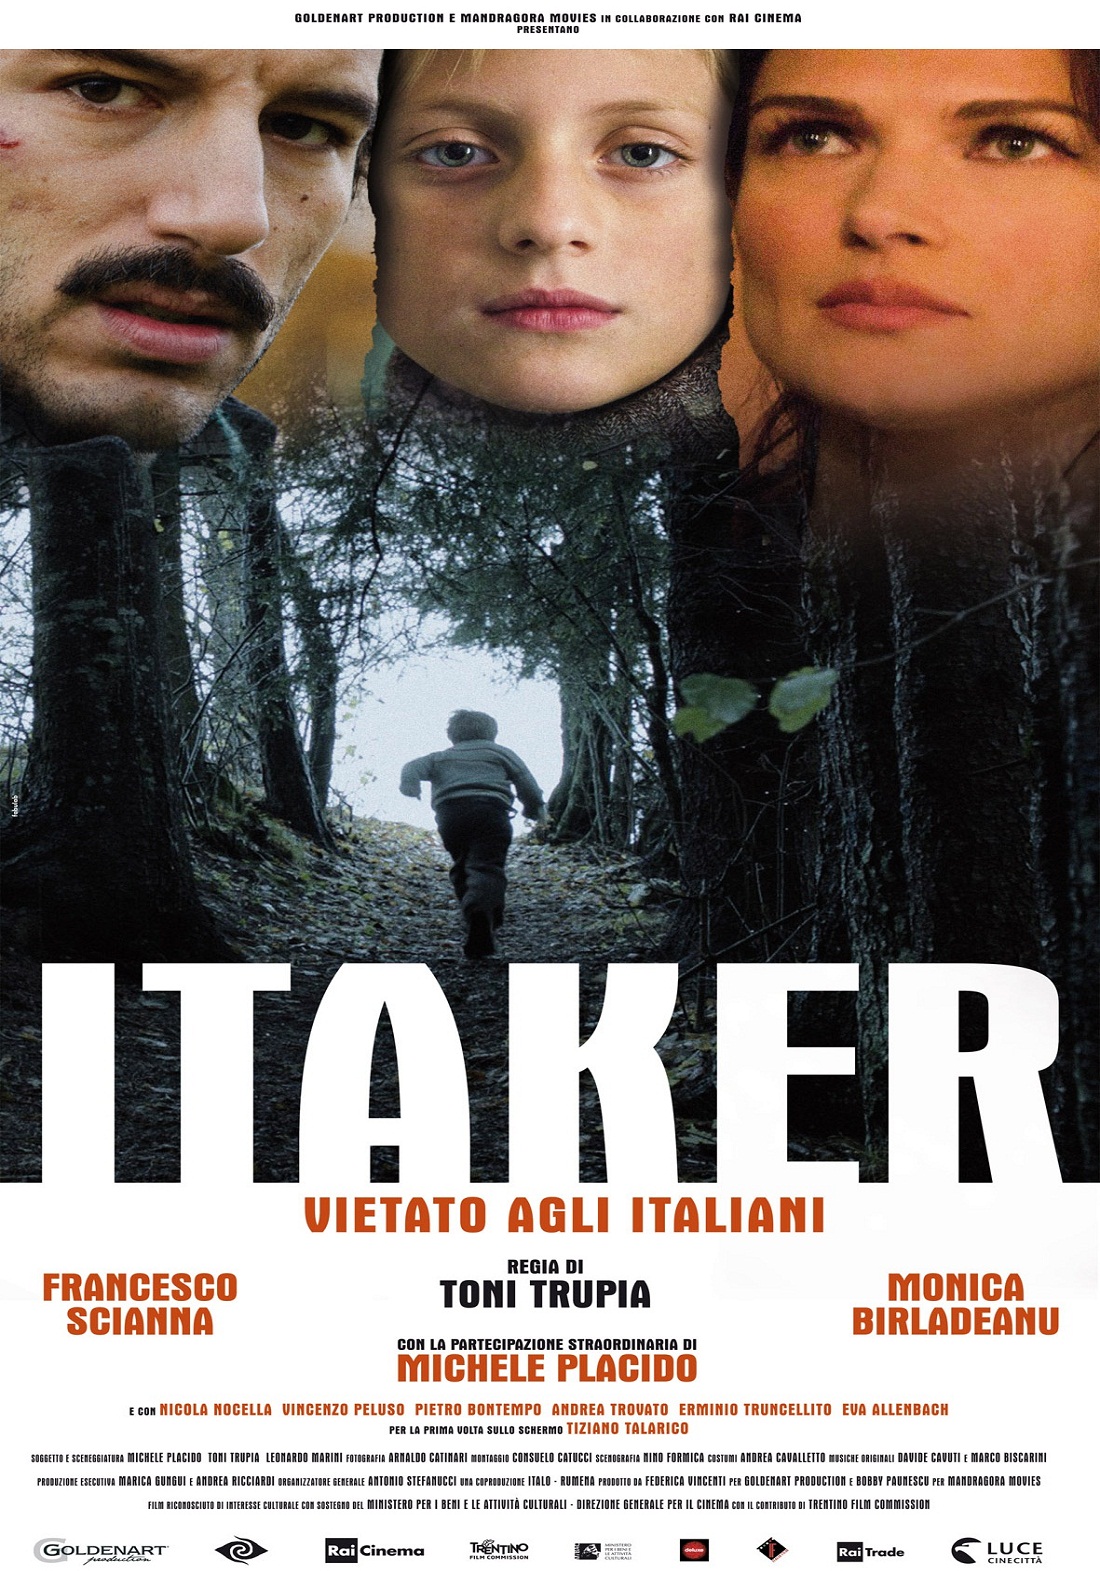 Itaker - Vietato agli italiani (2012) Screenshot 2